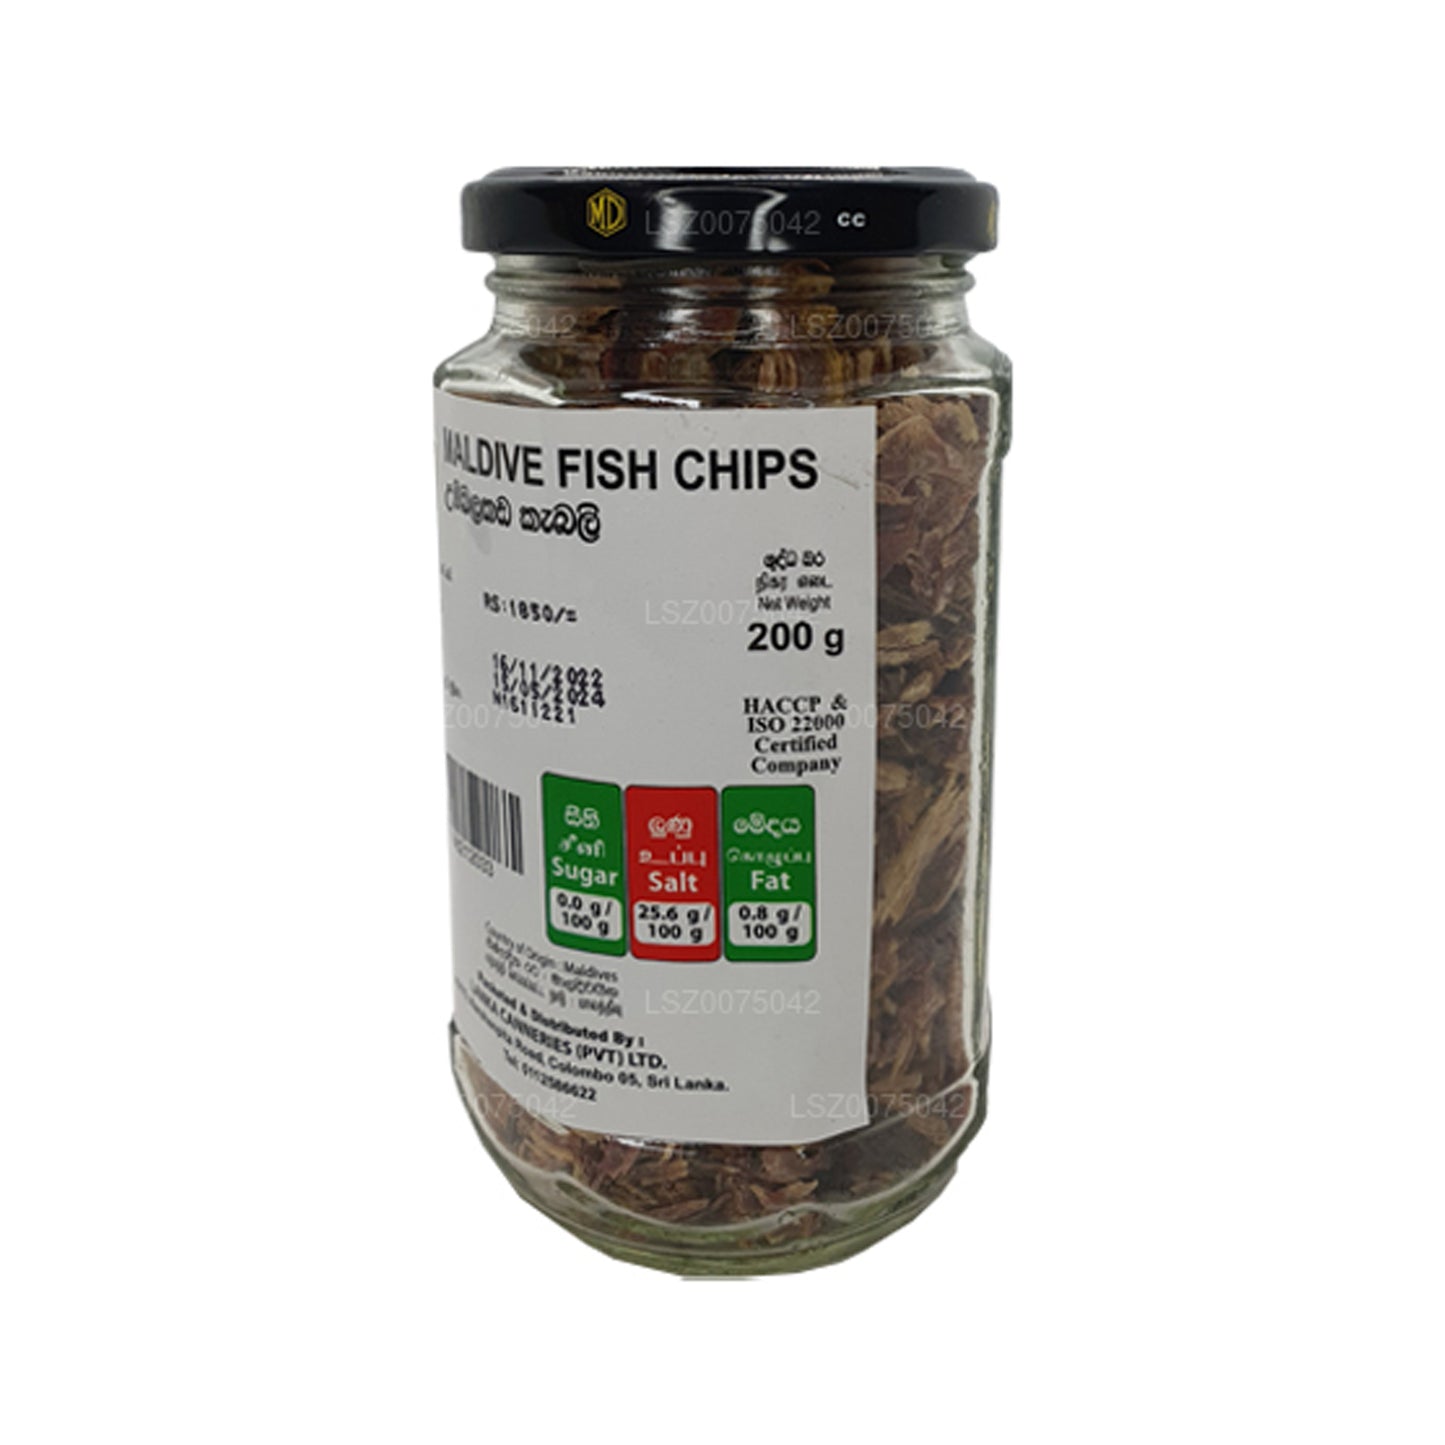 MD Maldive Fish Chips Flasche (200 g)